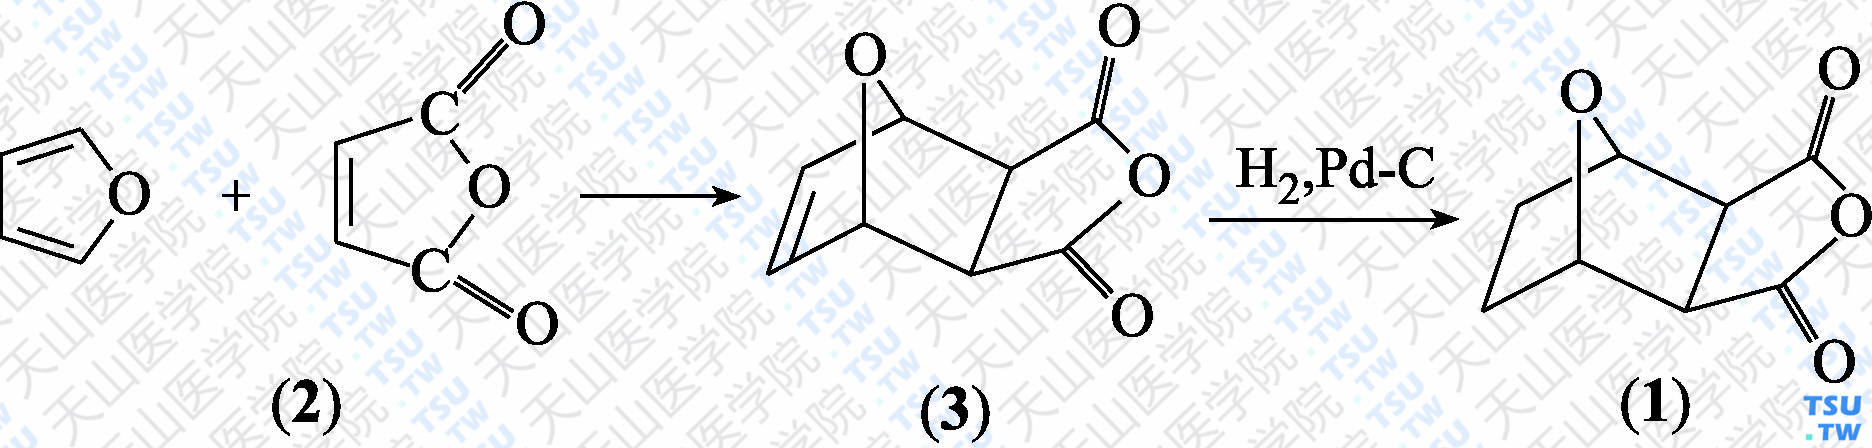 去甲斑蝥素（分子式：C<sub>8</sub>H<sub>8</sub>O<sub>4</sub>）的合成方法路线及其结构式